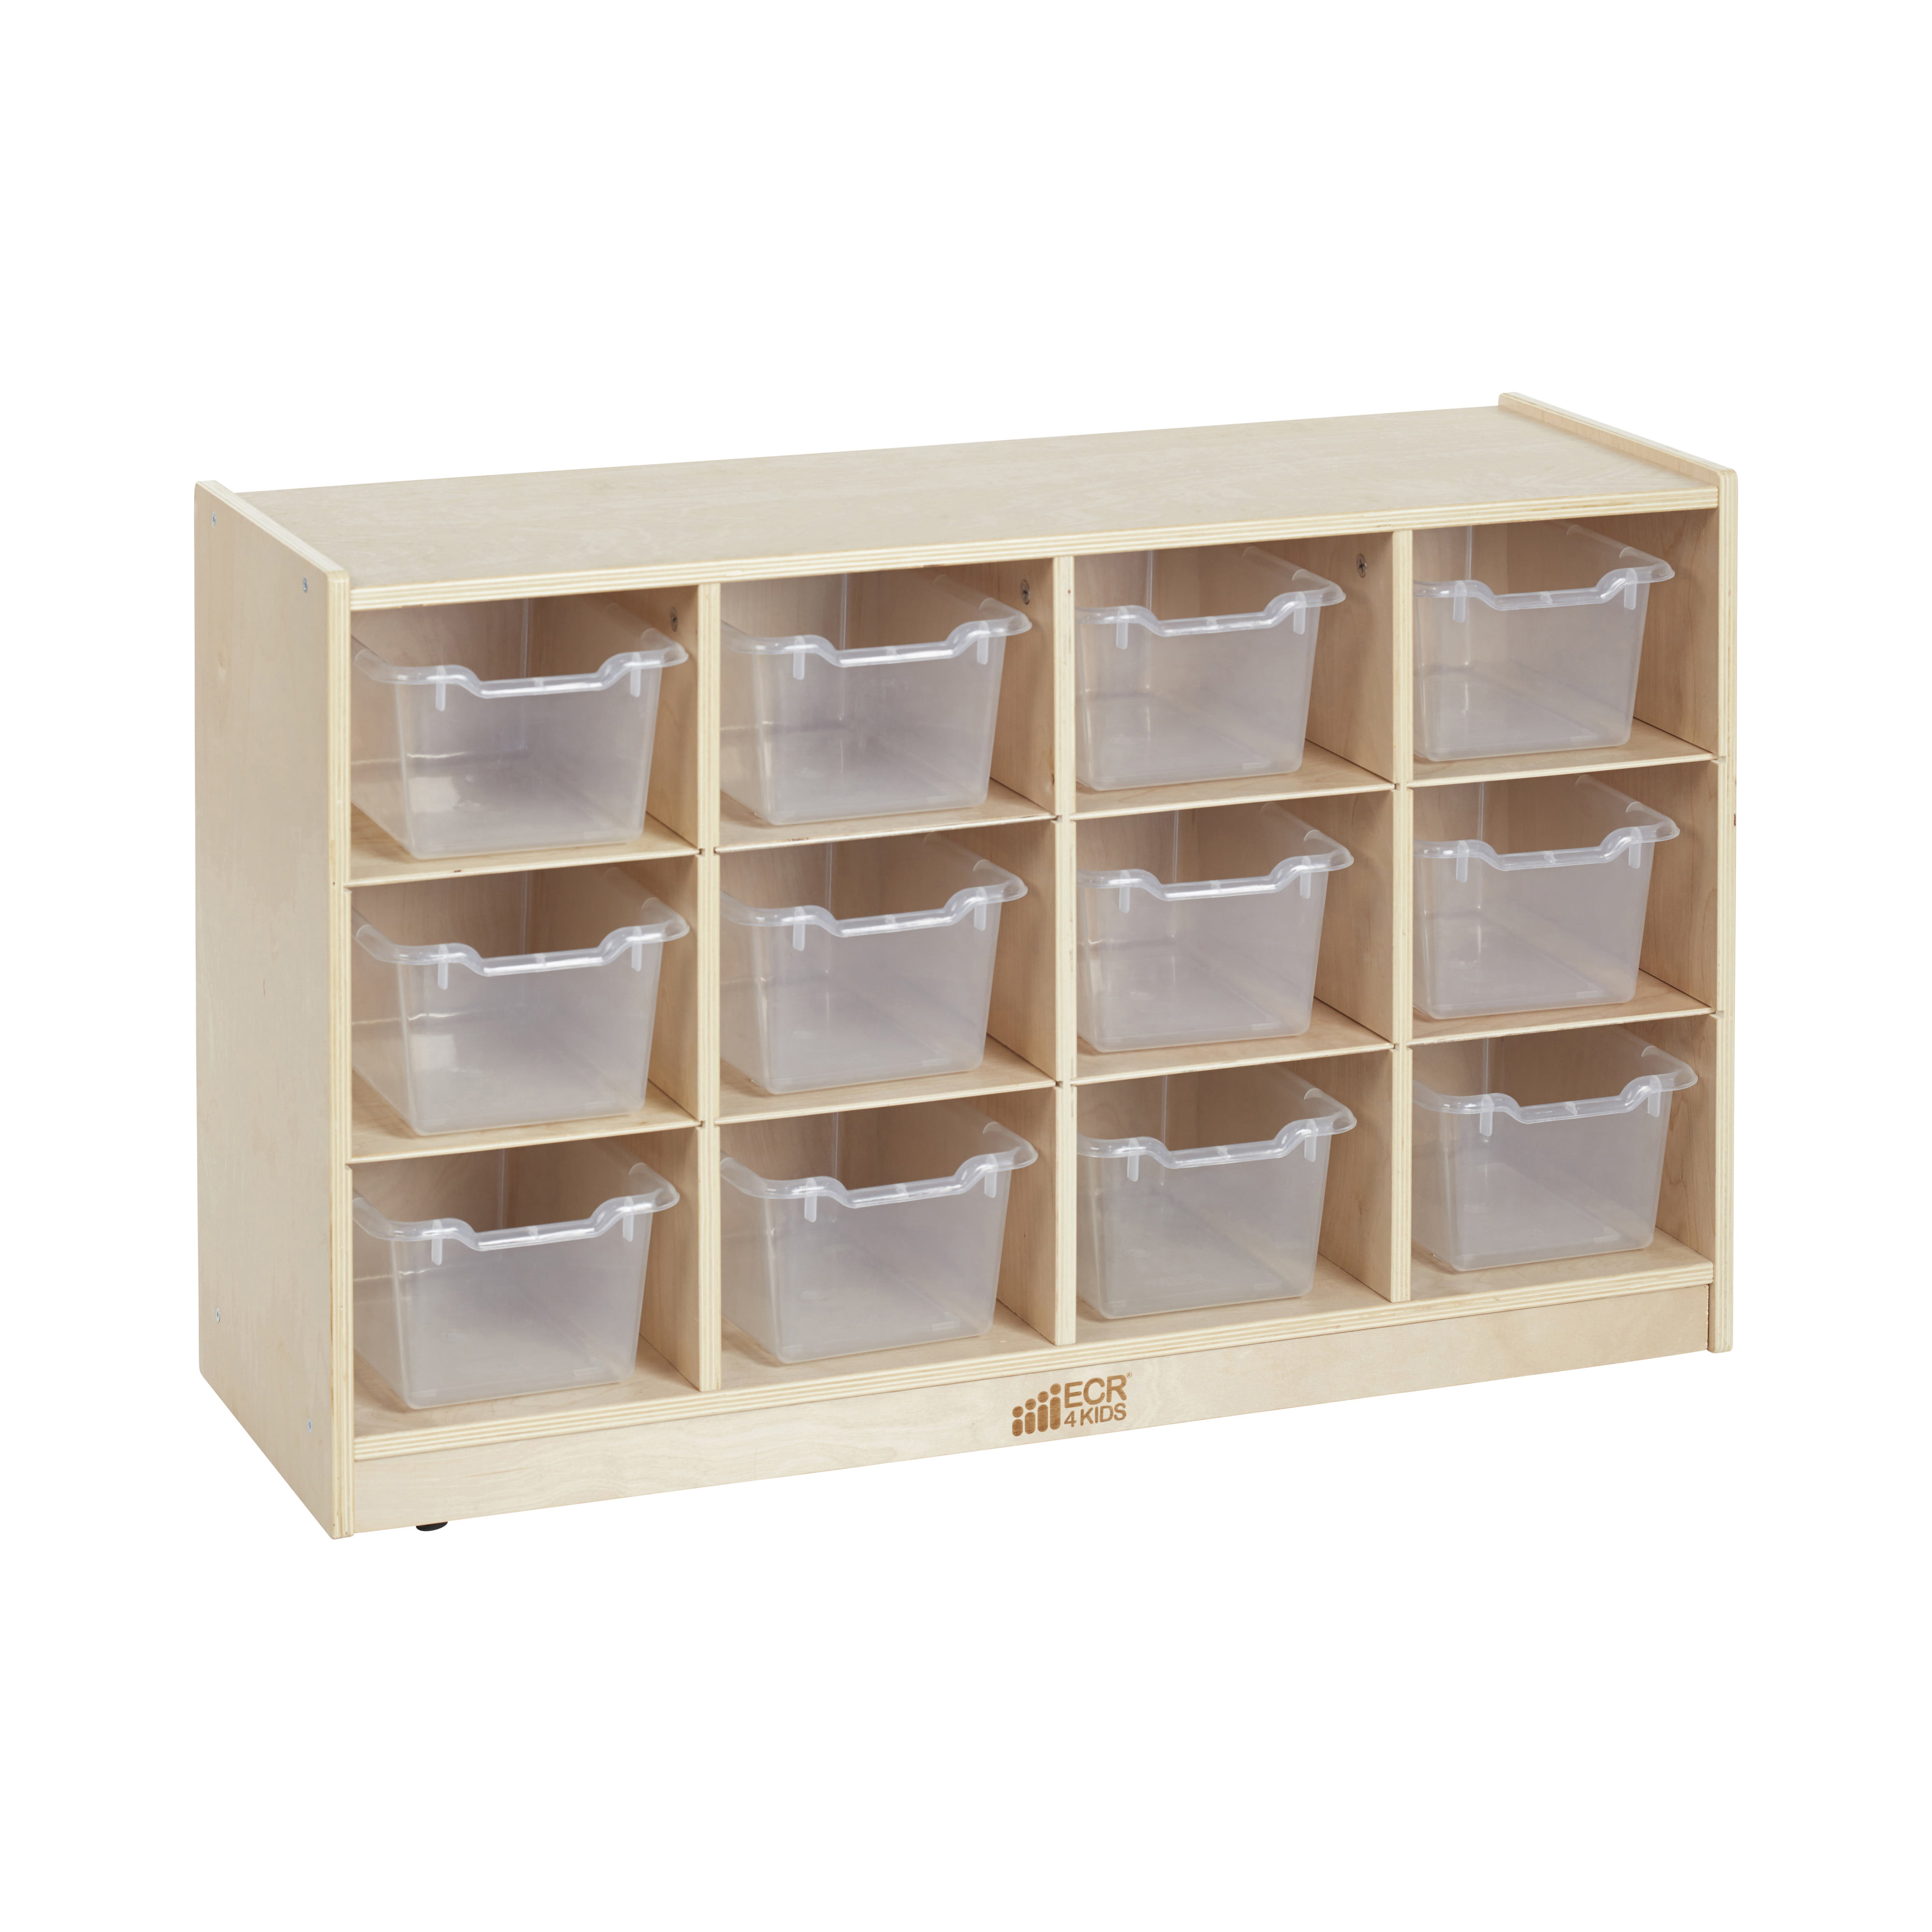 Details about   ECR4Kids Birch School/Classroom Wood Storage Cabinet w/ Casters 